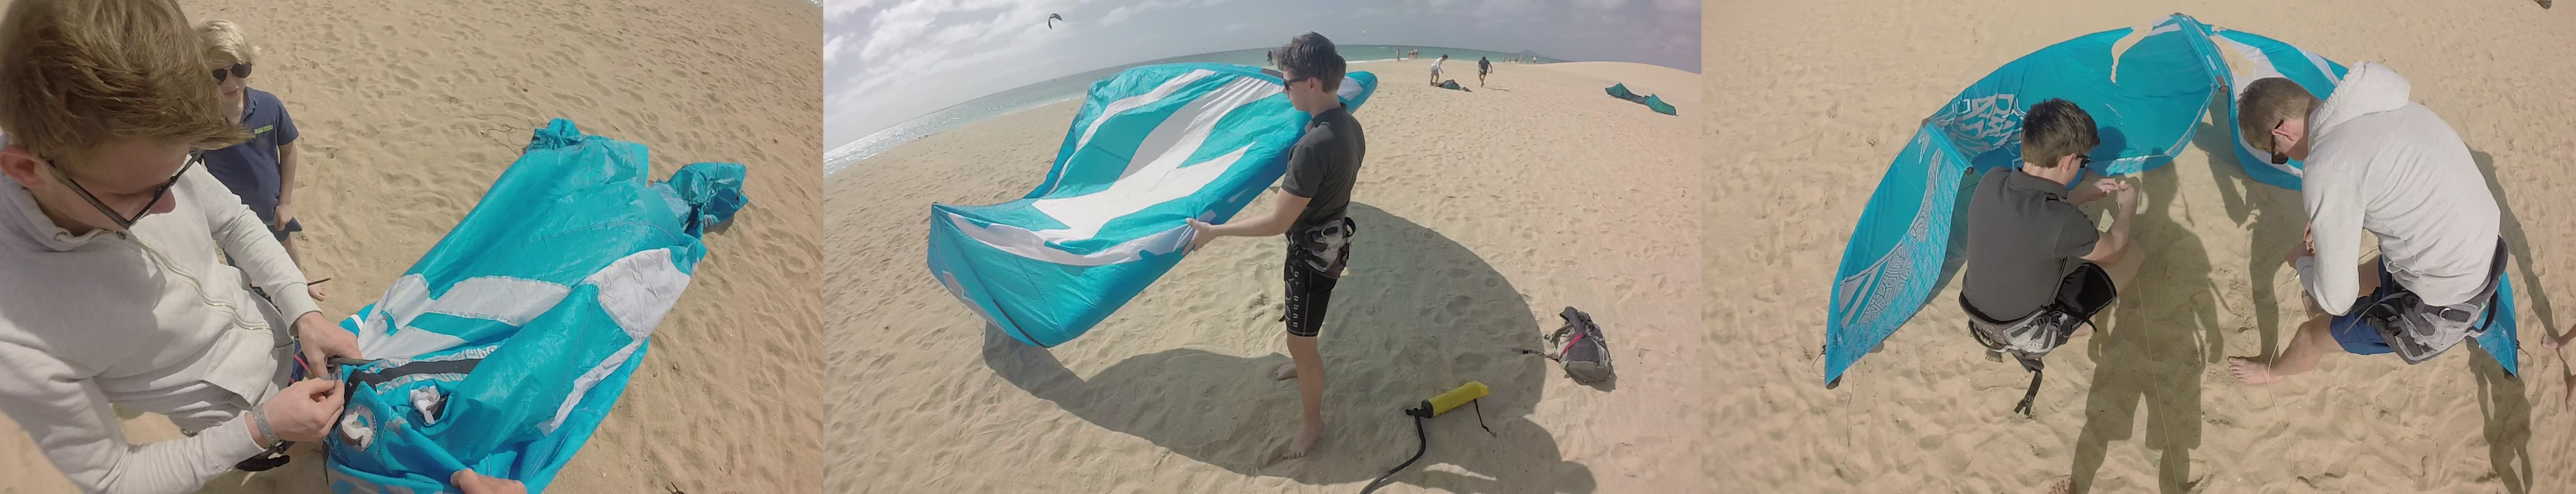 Preparing the kite for a Kitesurf lesson in Tarifa